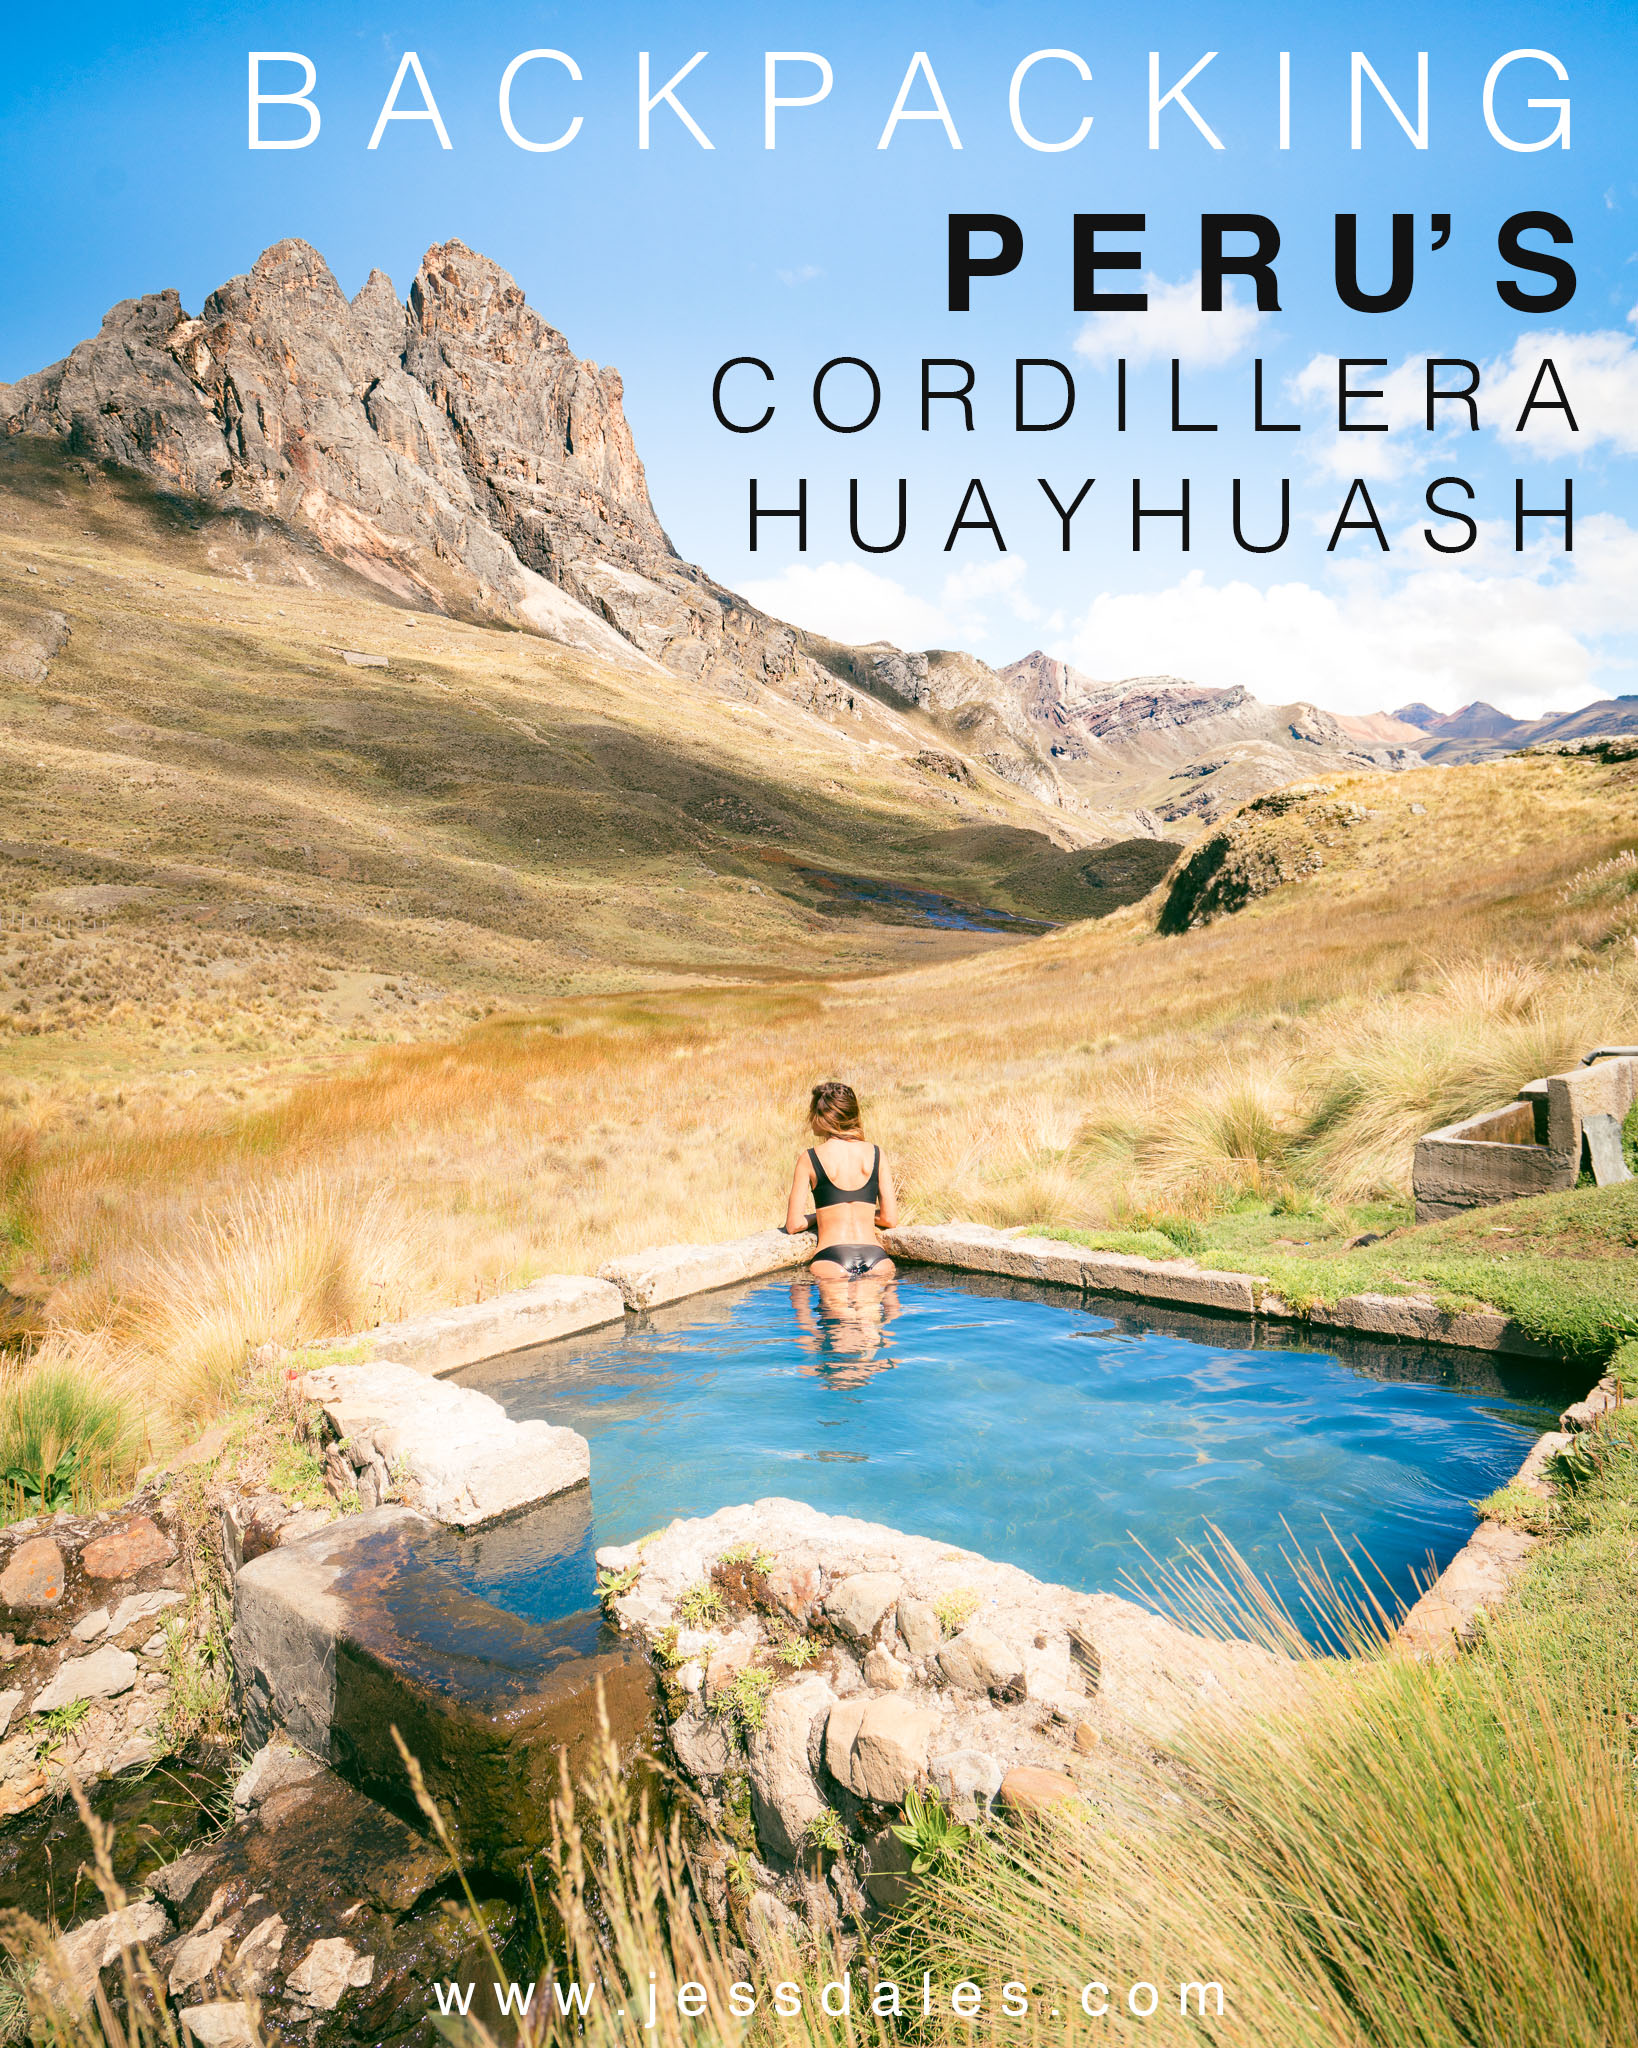 Hot springs on the Cordillera Huayhuash Trek in Peru.